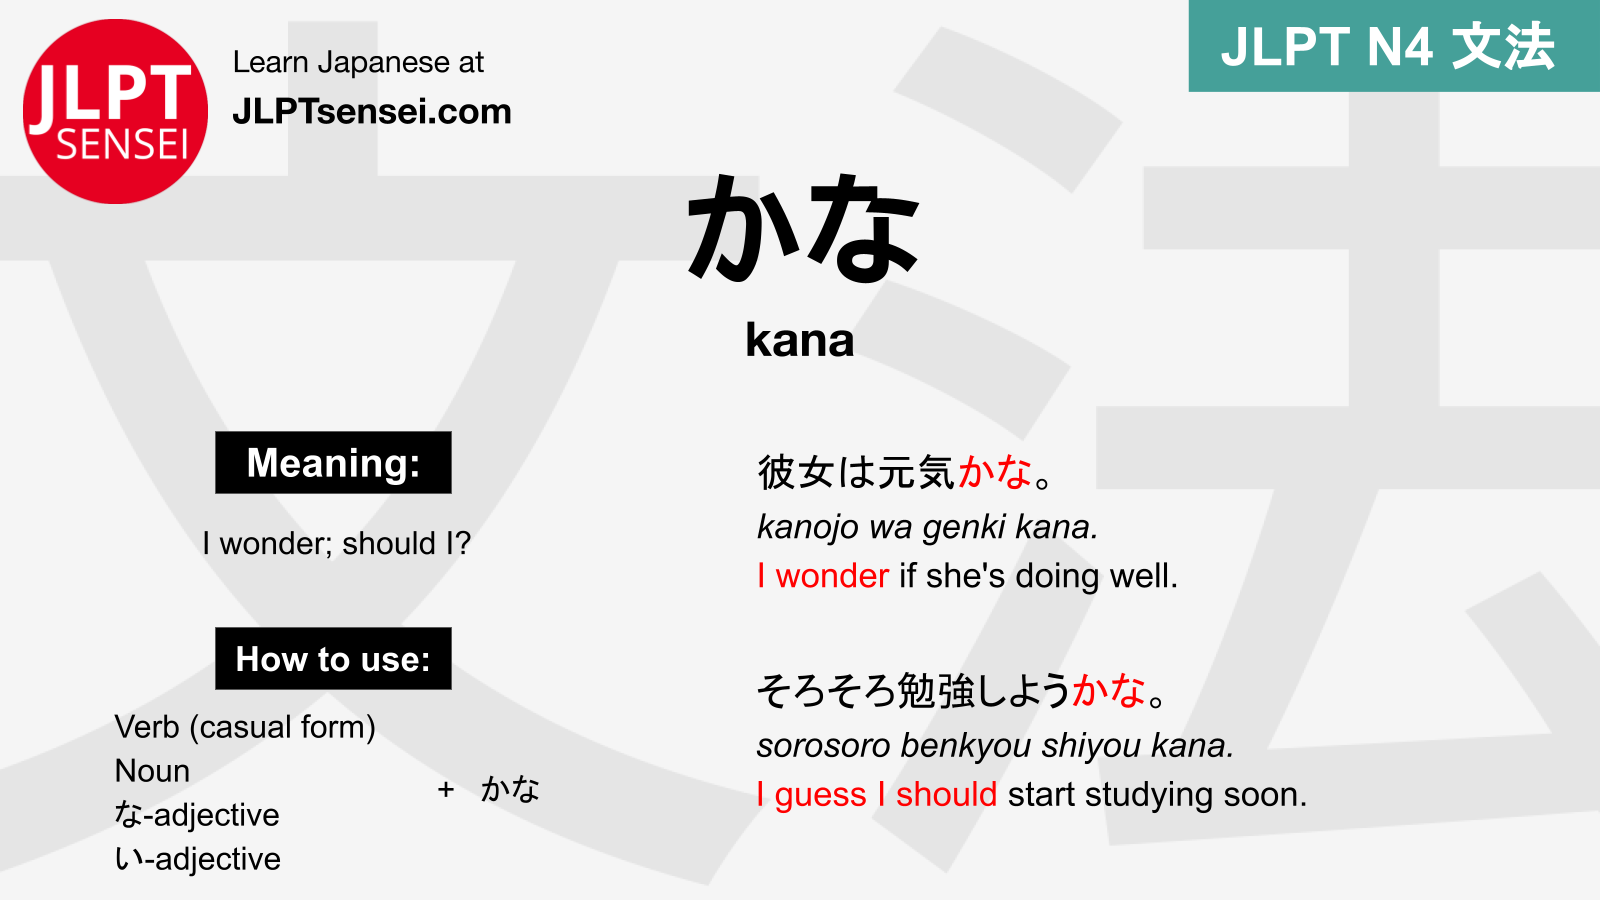 JLPT N4 Grammar: かな (kana) Meaning – JLPTsensei.com